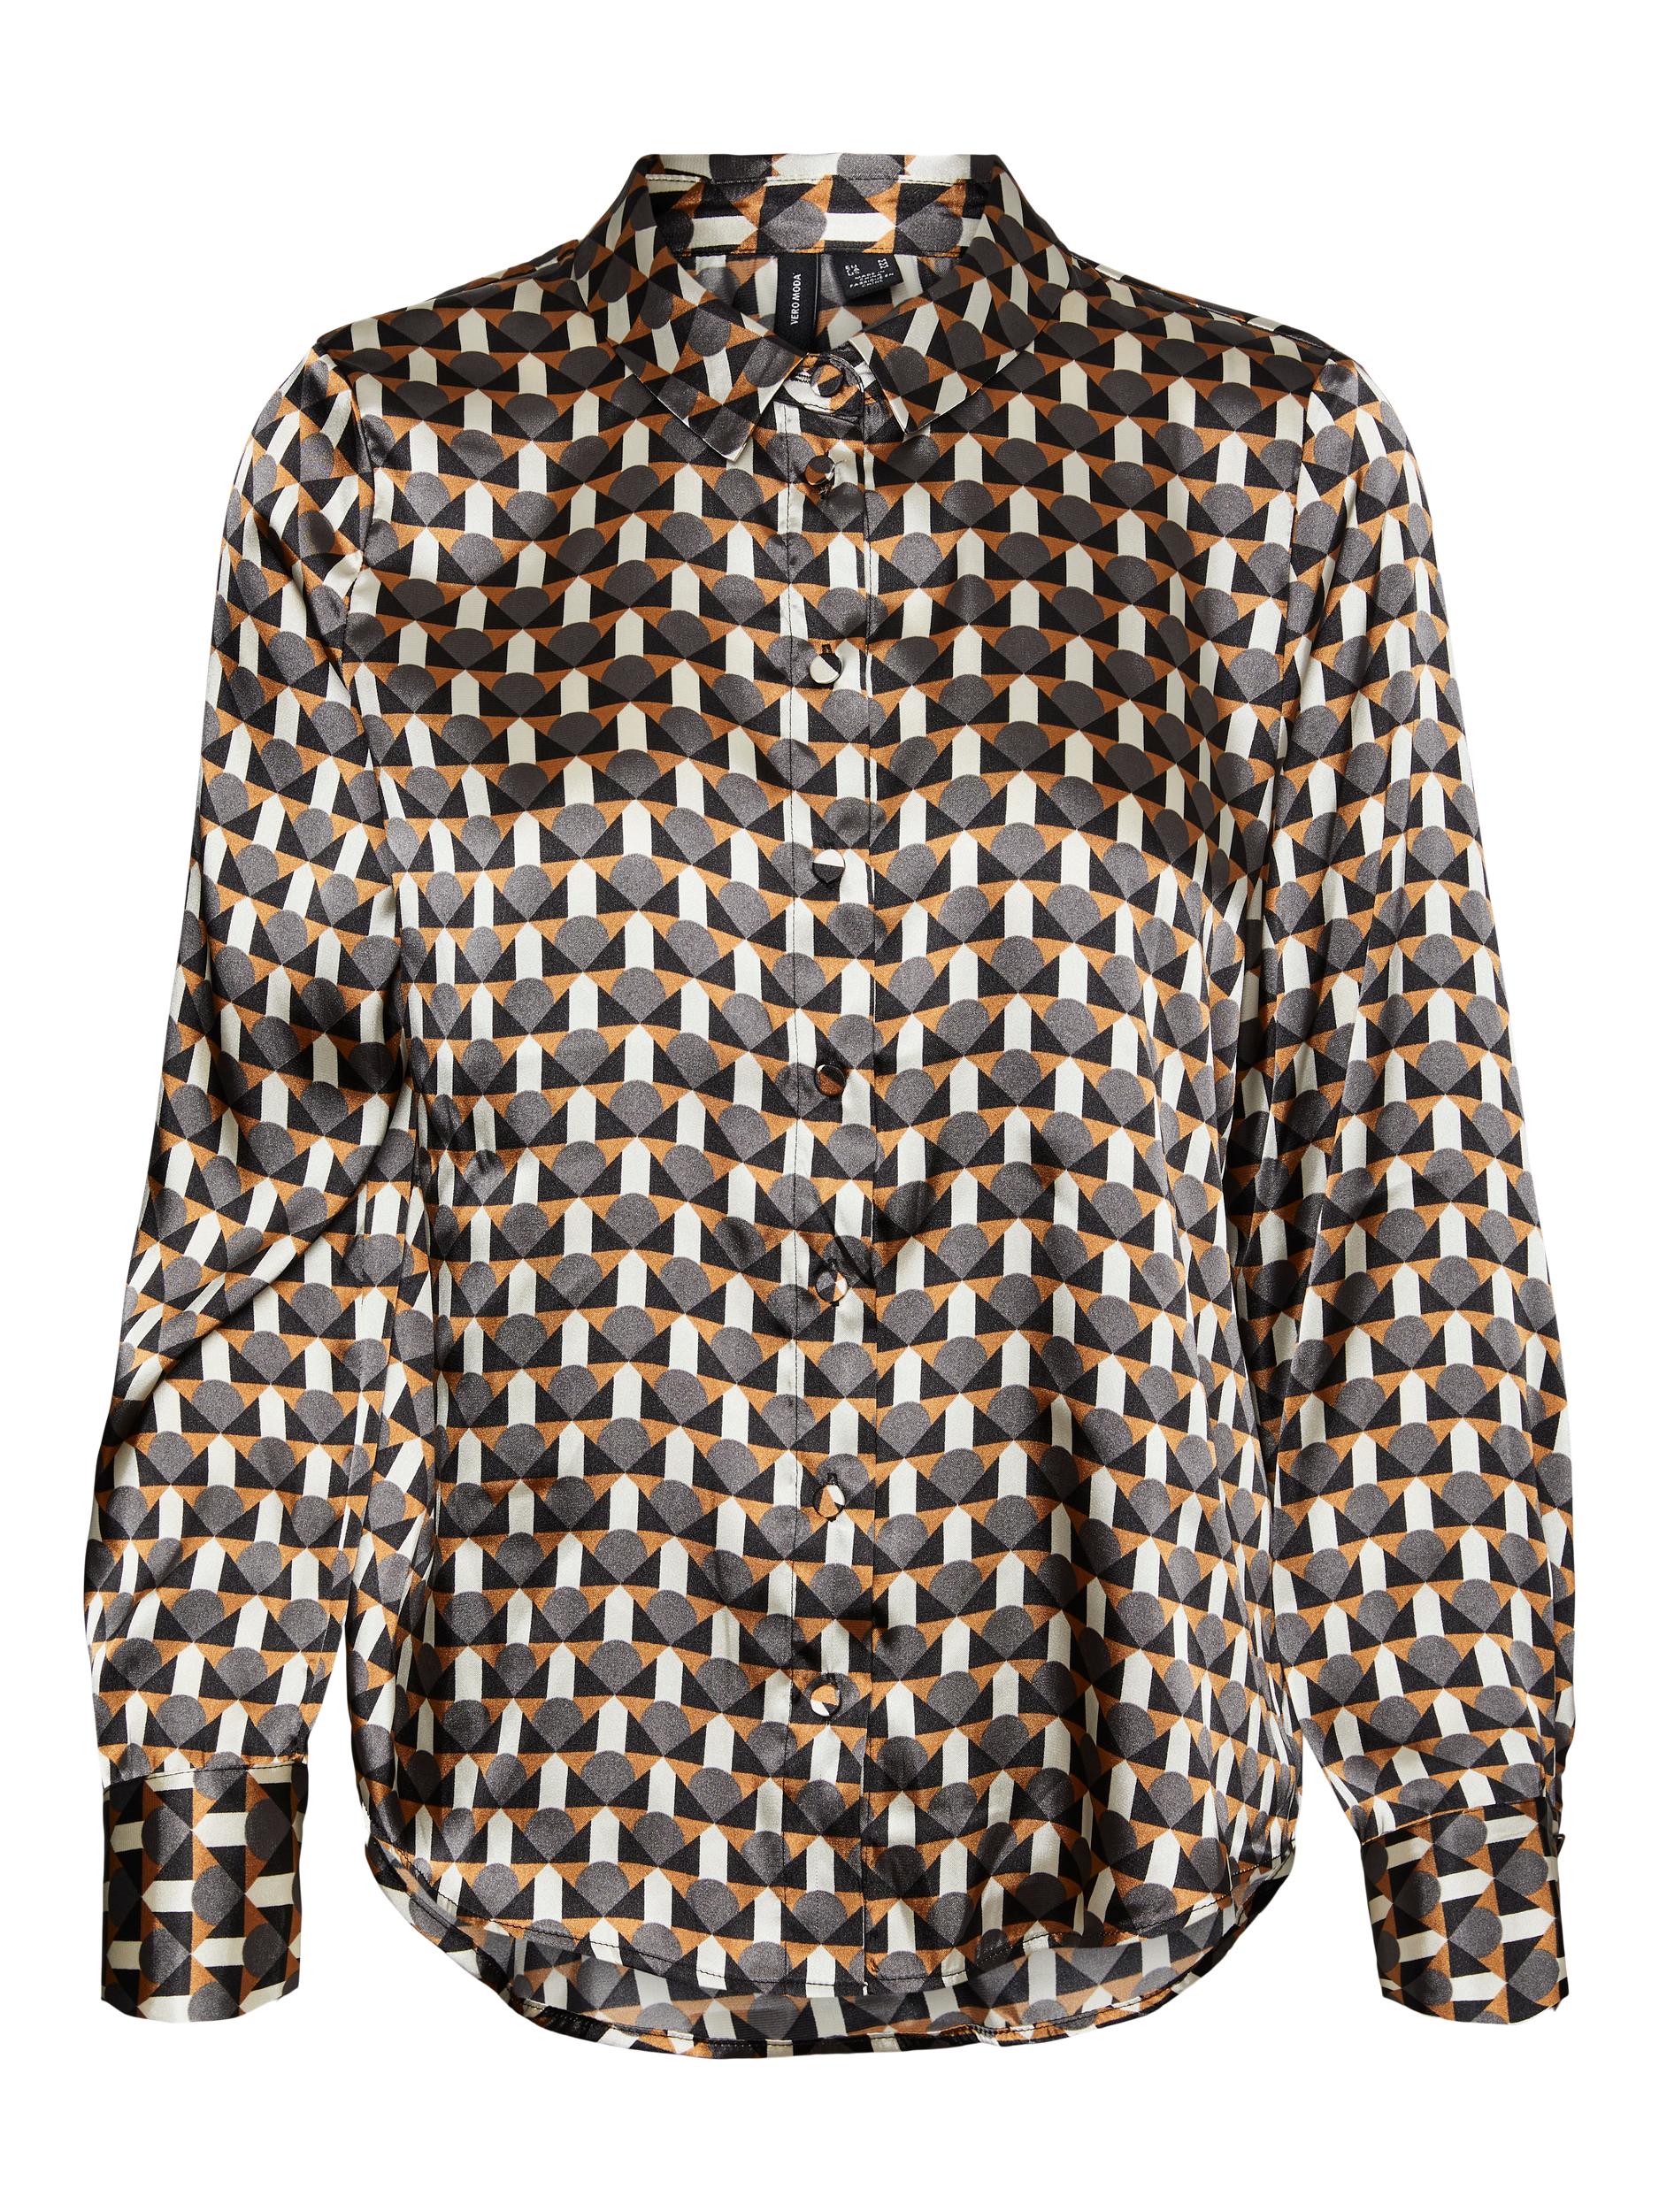 FINAL SALE - Xara scarf print blouse, TOBACCO BROWN, large